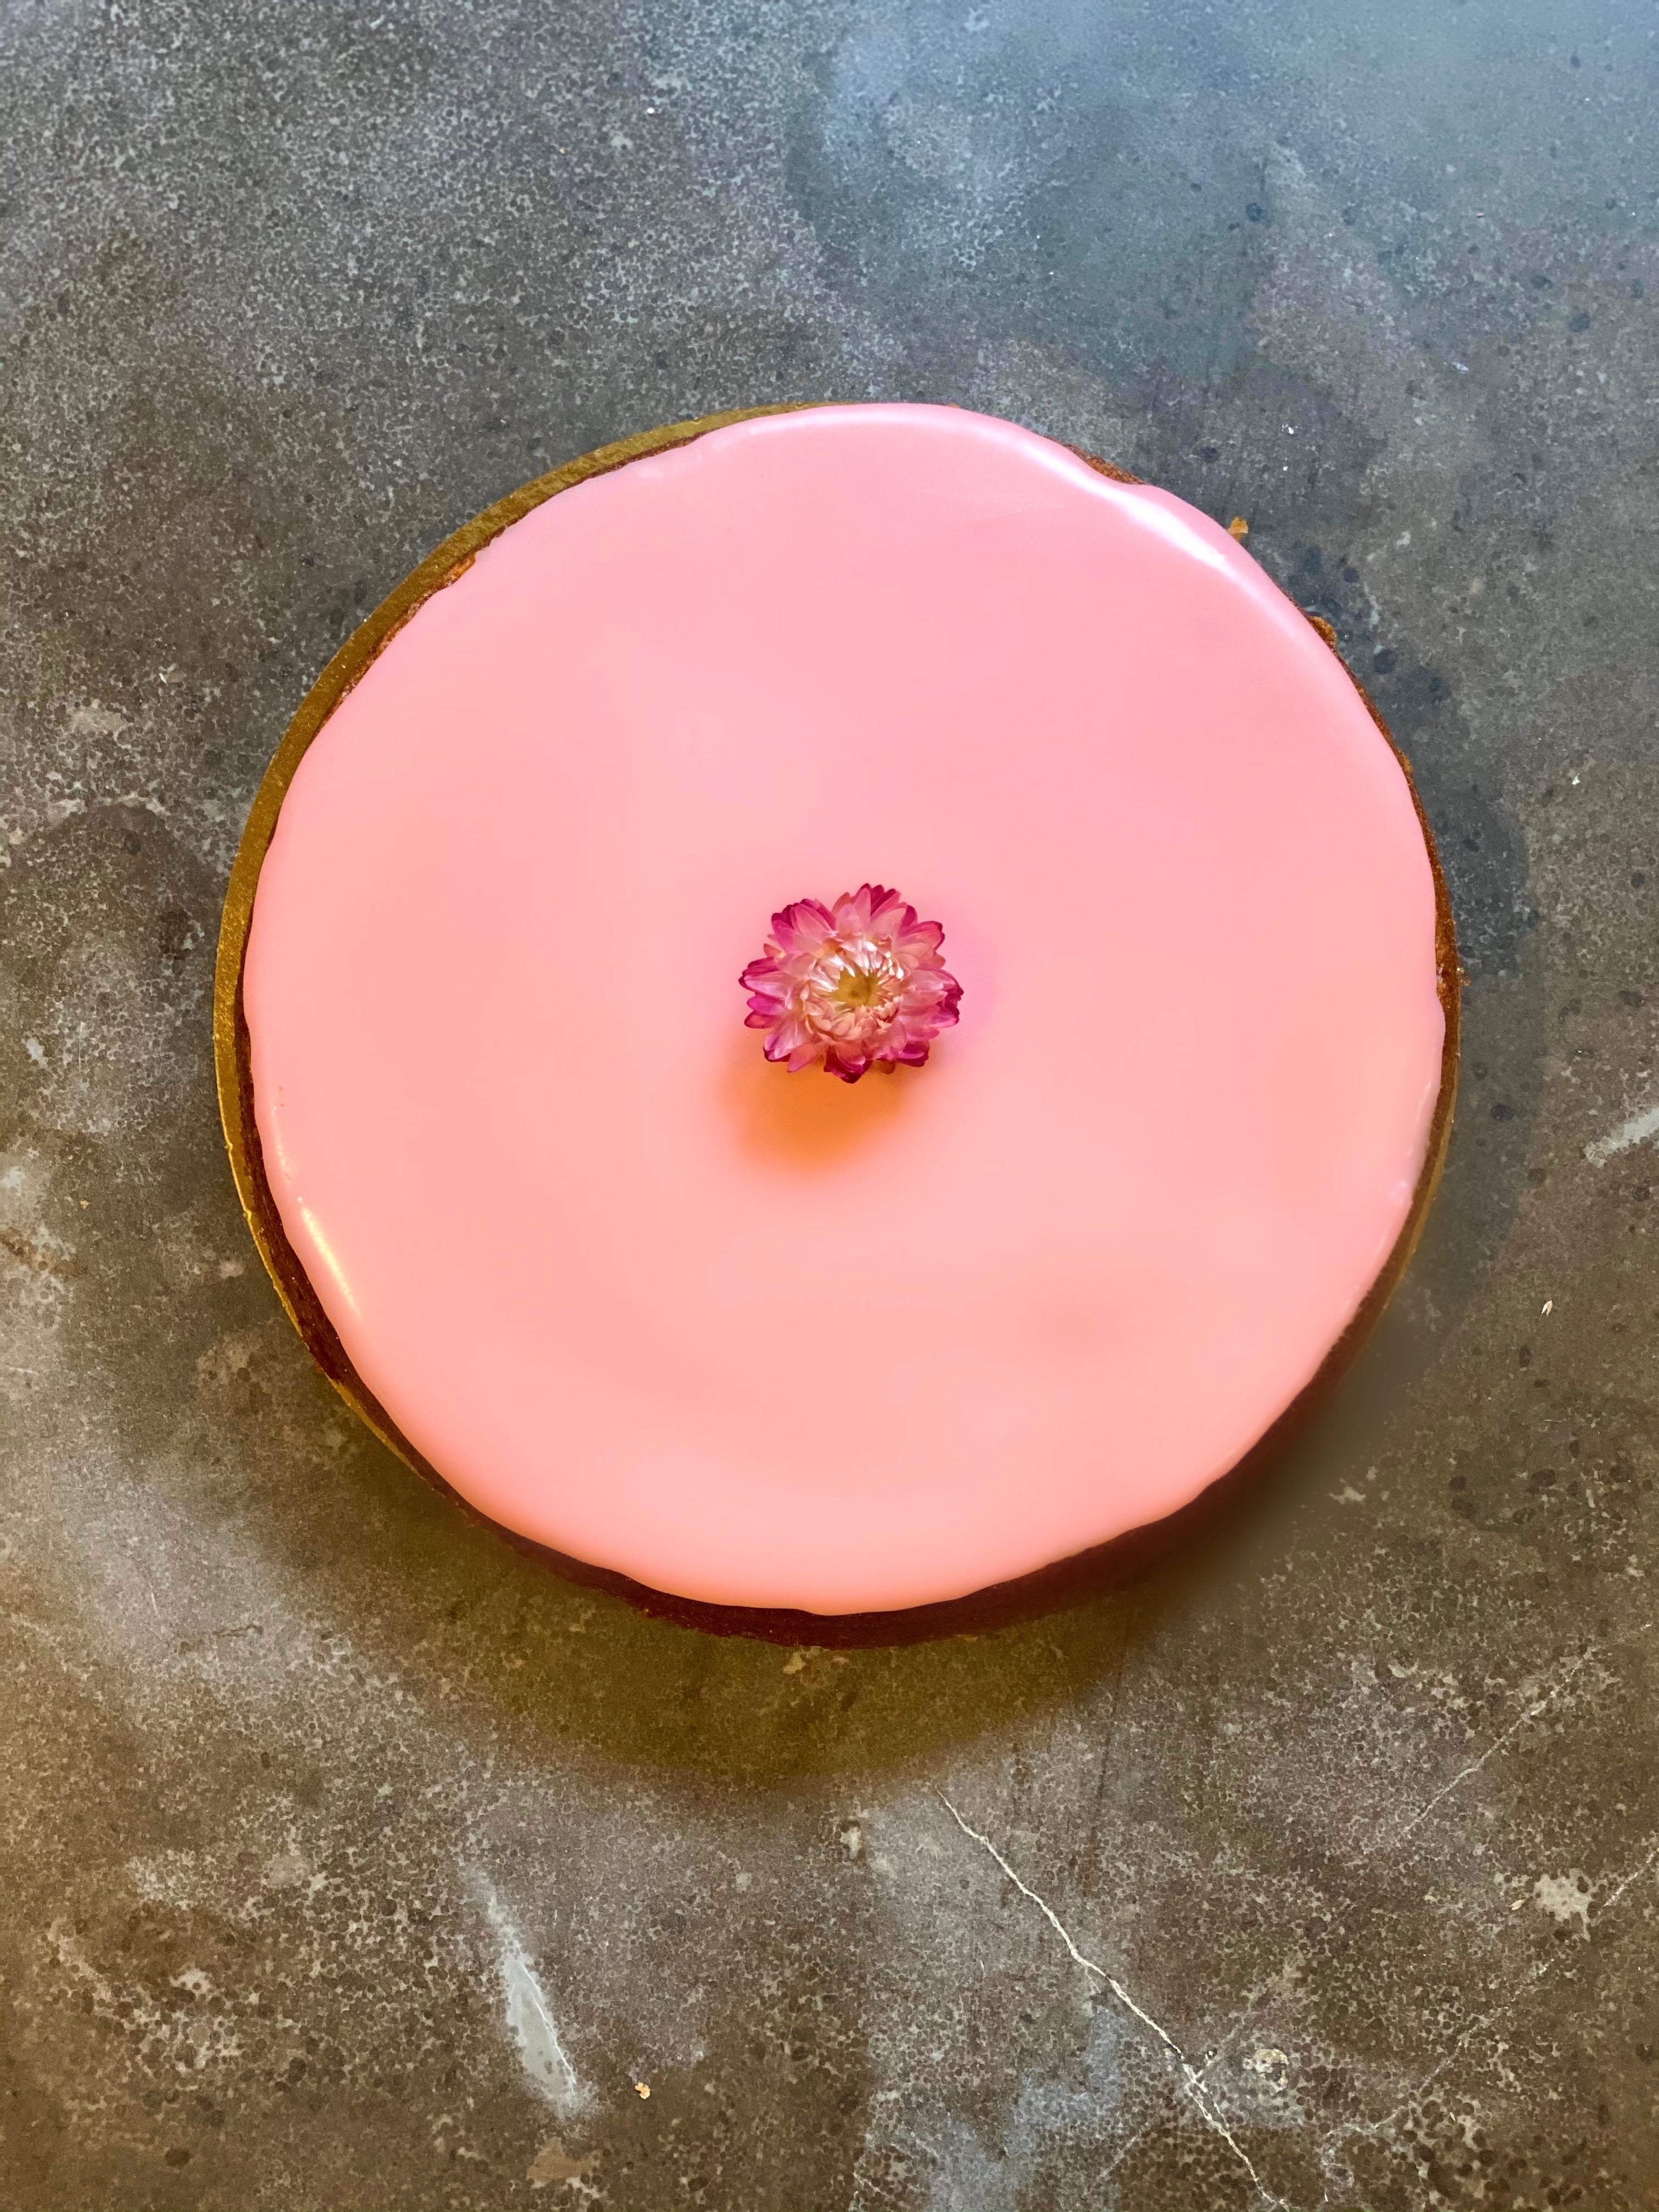 Pink-Toned Cake